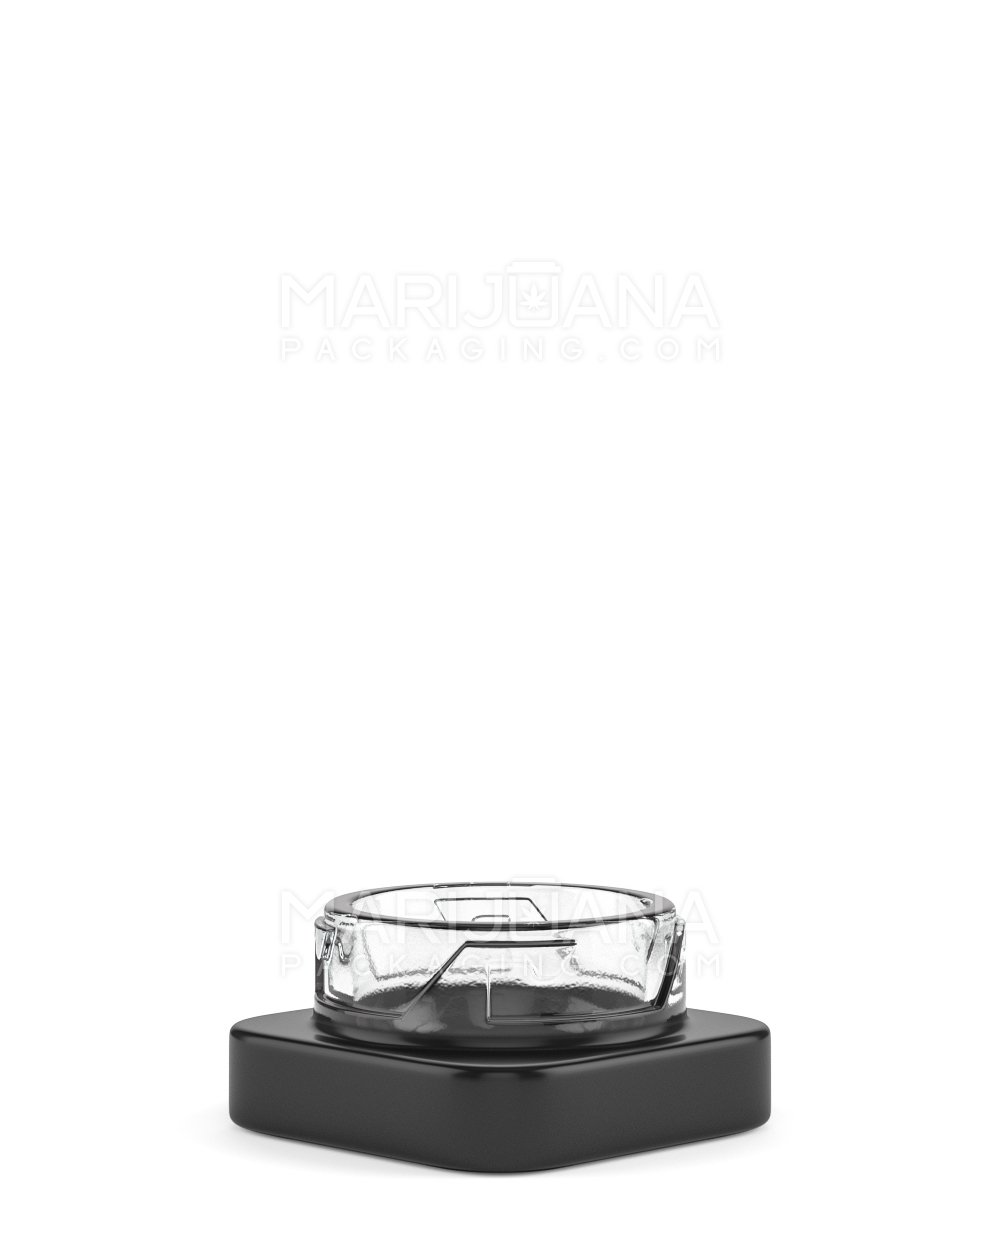 Child Resistant | Qube Black Glass Concentrate Jar w/ Black Cap | 32mm - 5mL - 250 Count - 2